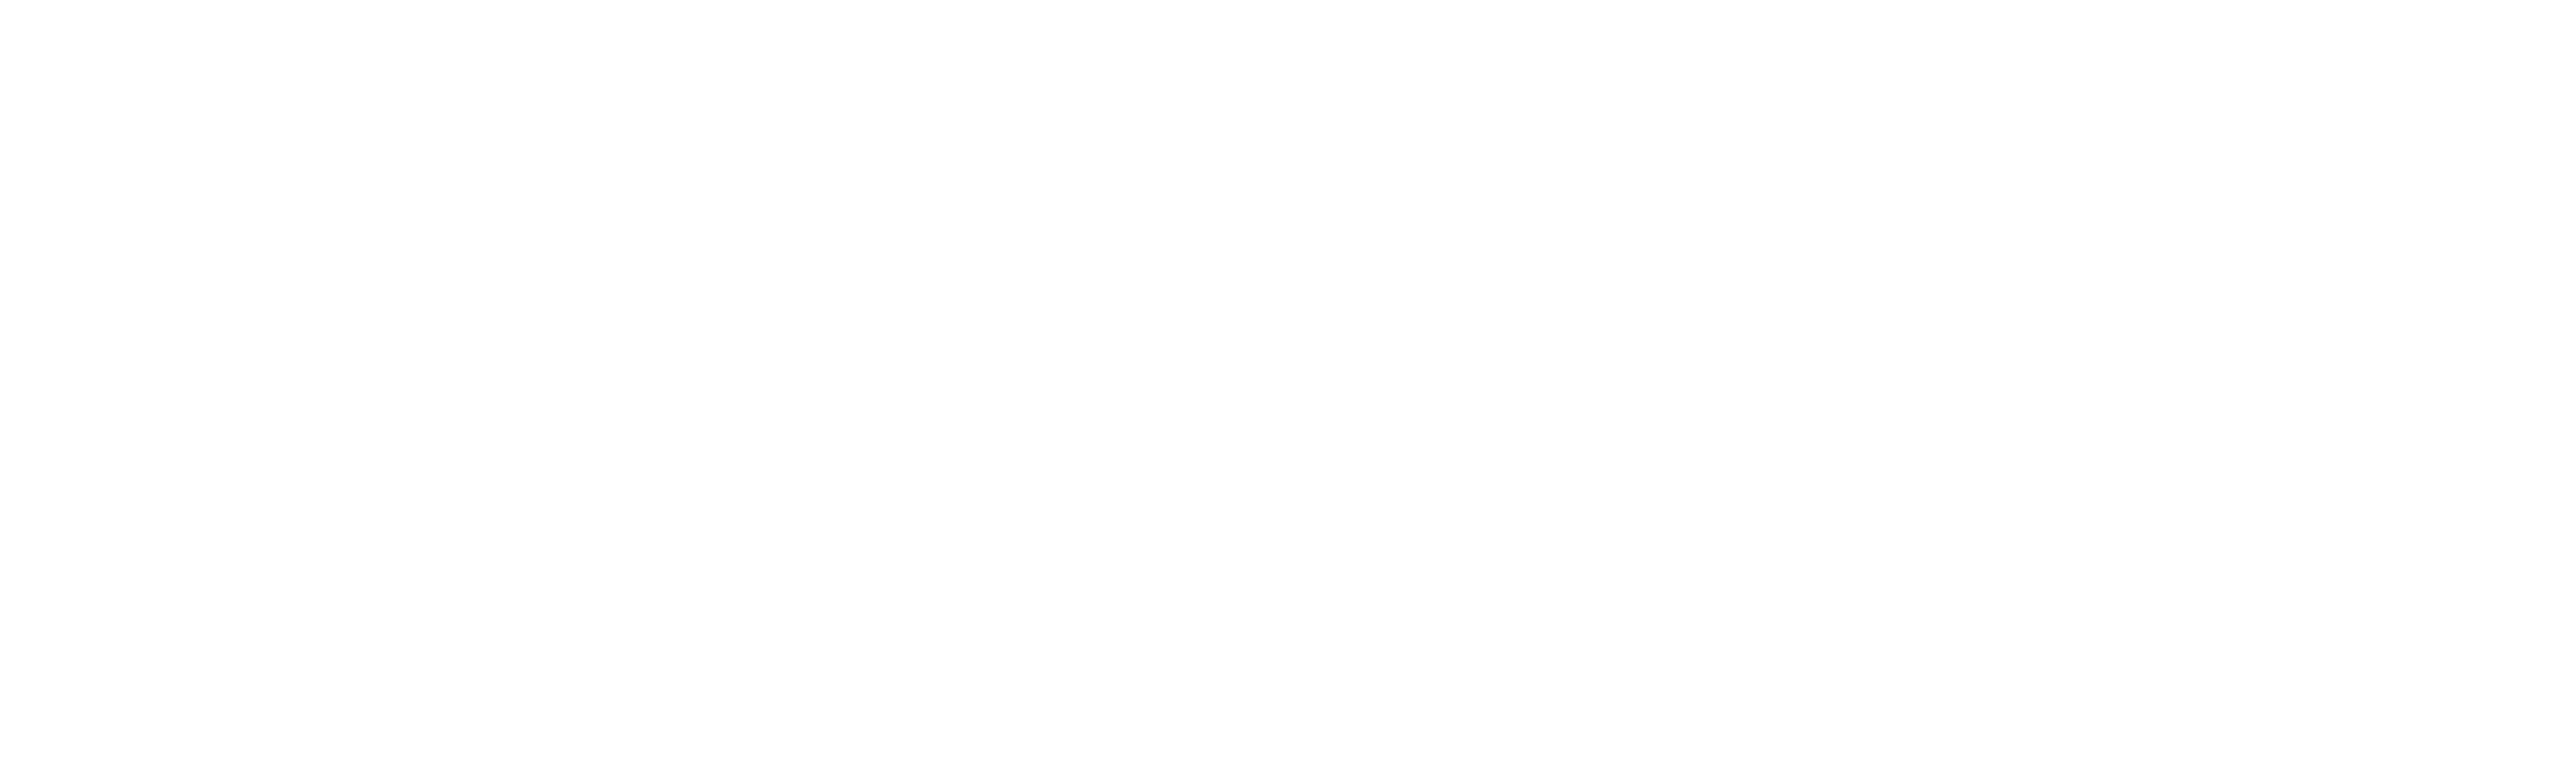 CEE Digital Democracy Watch